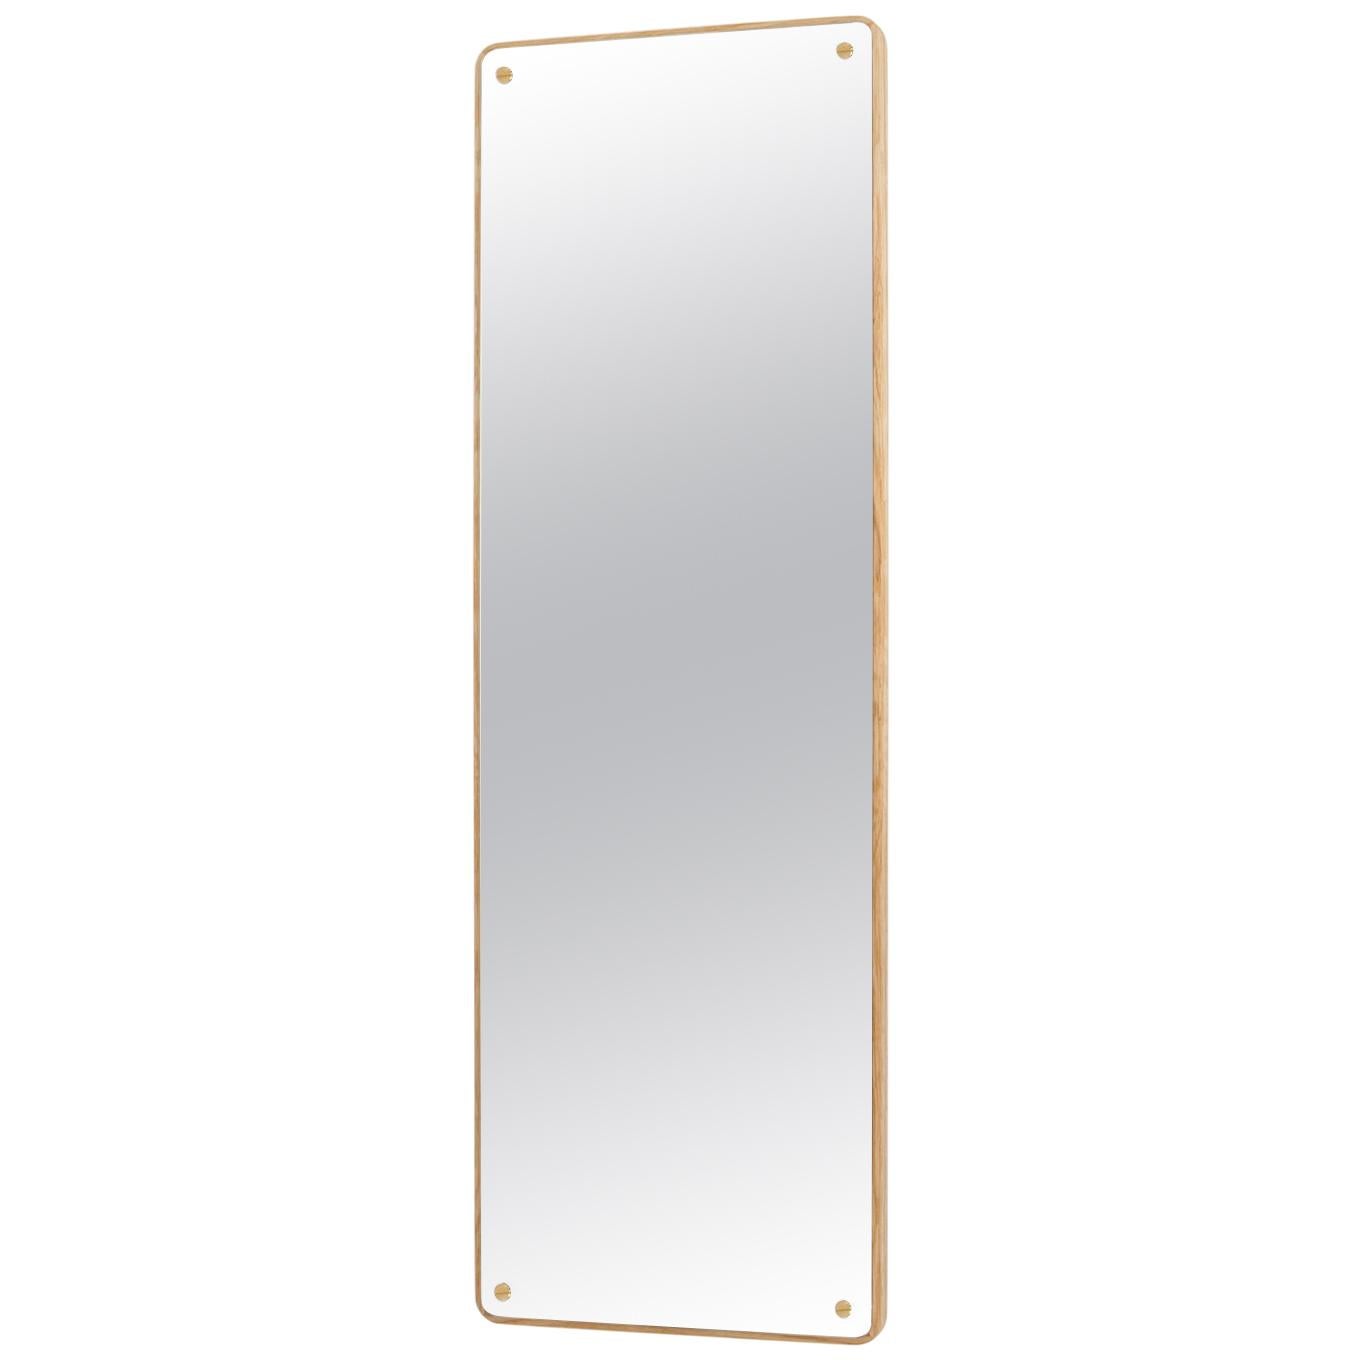 Grand miroir rectangulaire RM-1 de conception contemporaine FRAMA